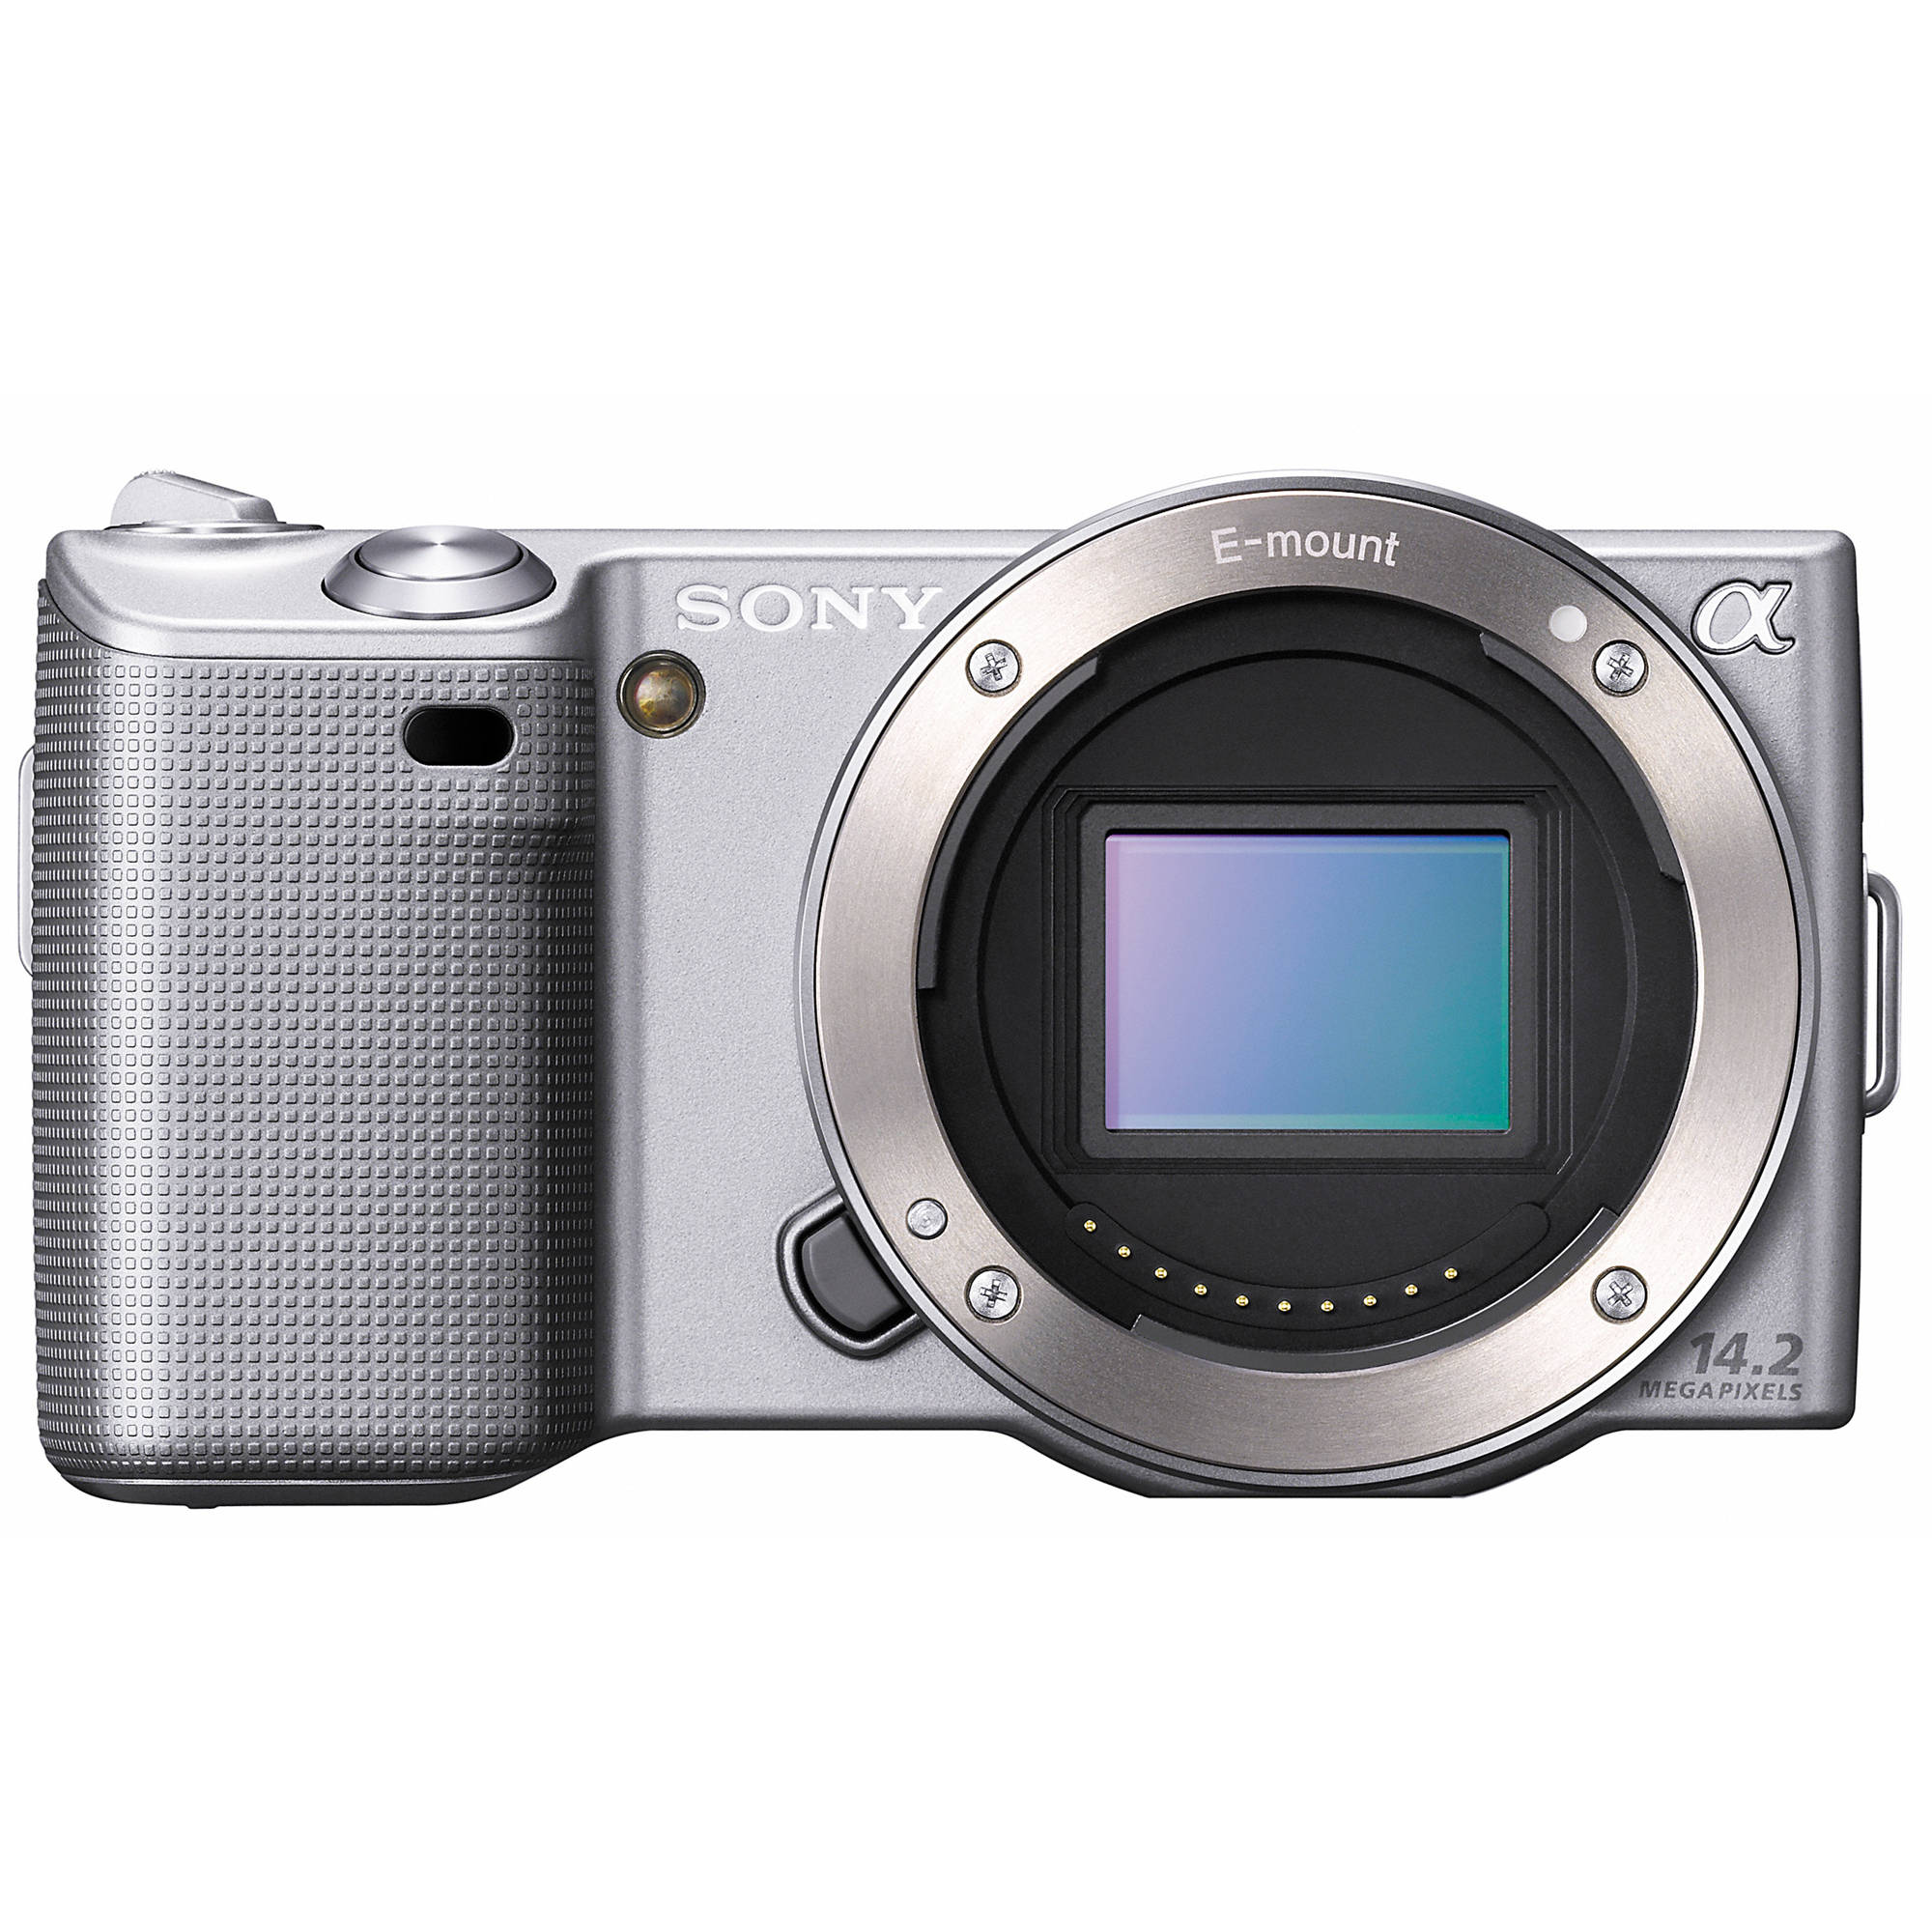 Sony Alpha Nex 5 Interchangeable Lens Digital Camera Nex5k S B H